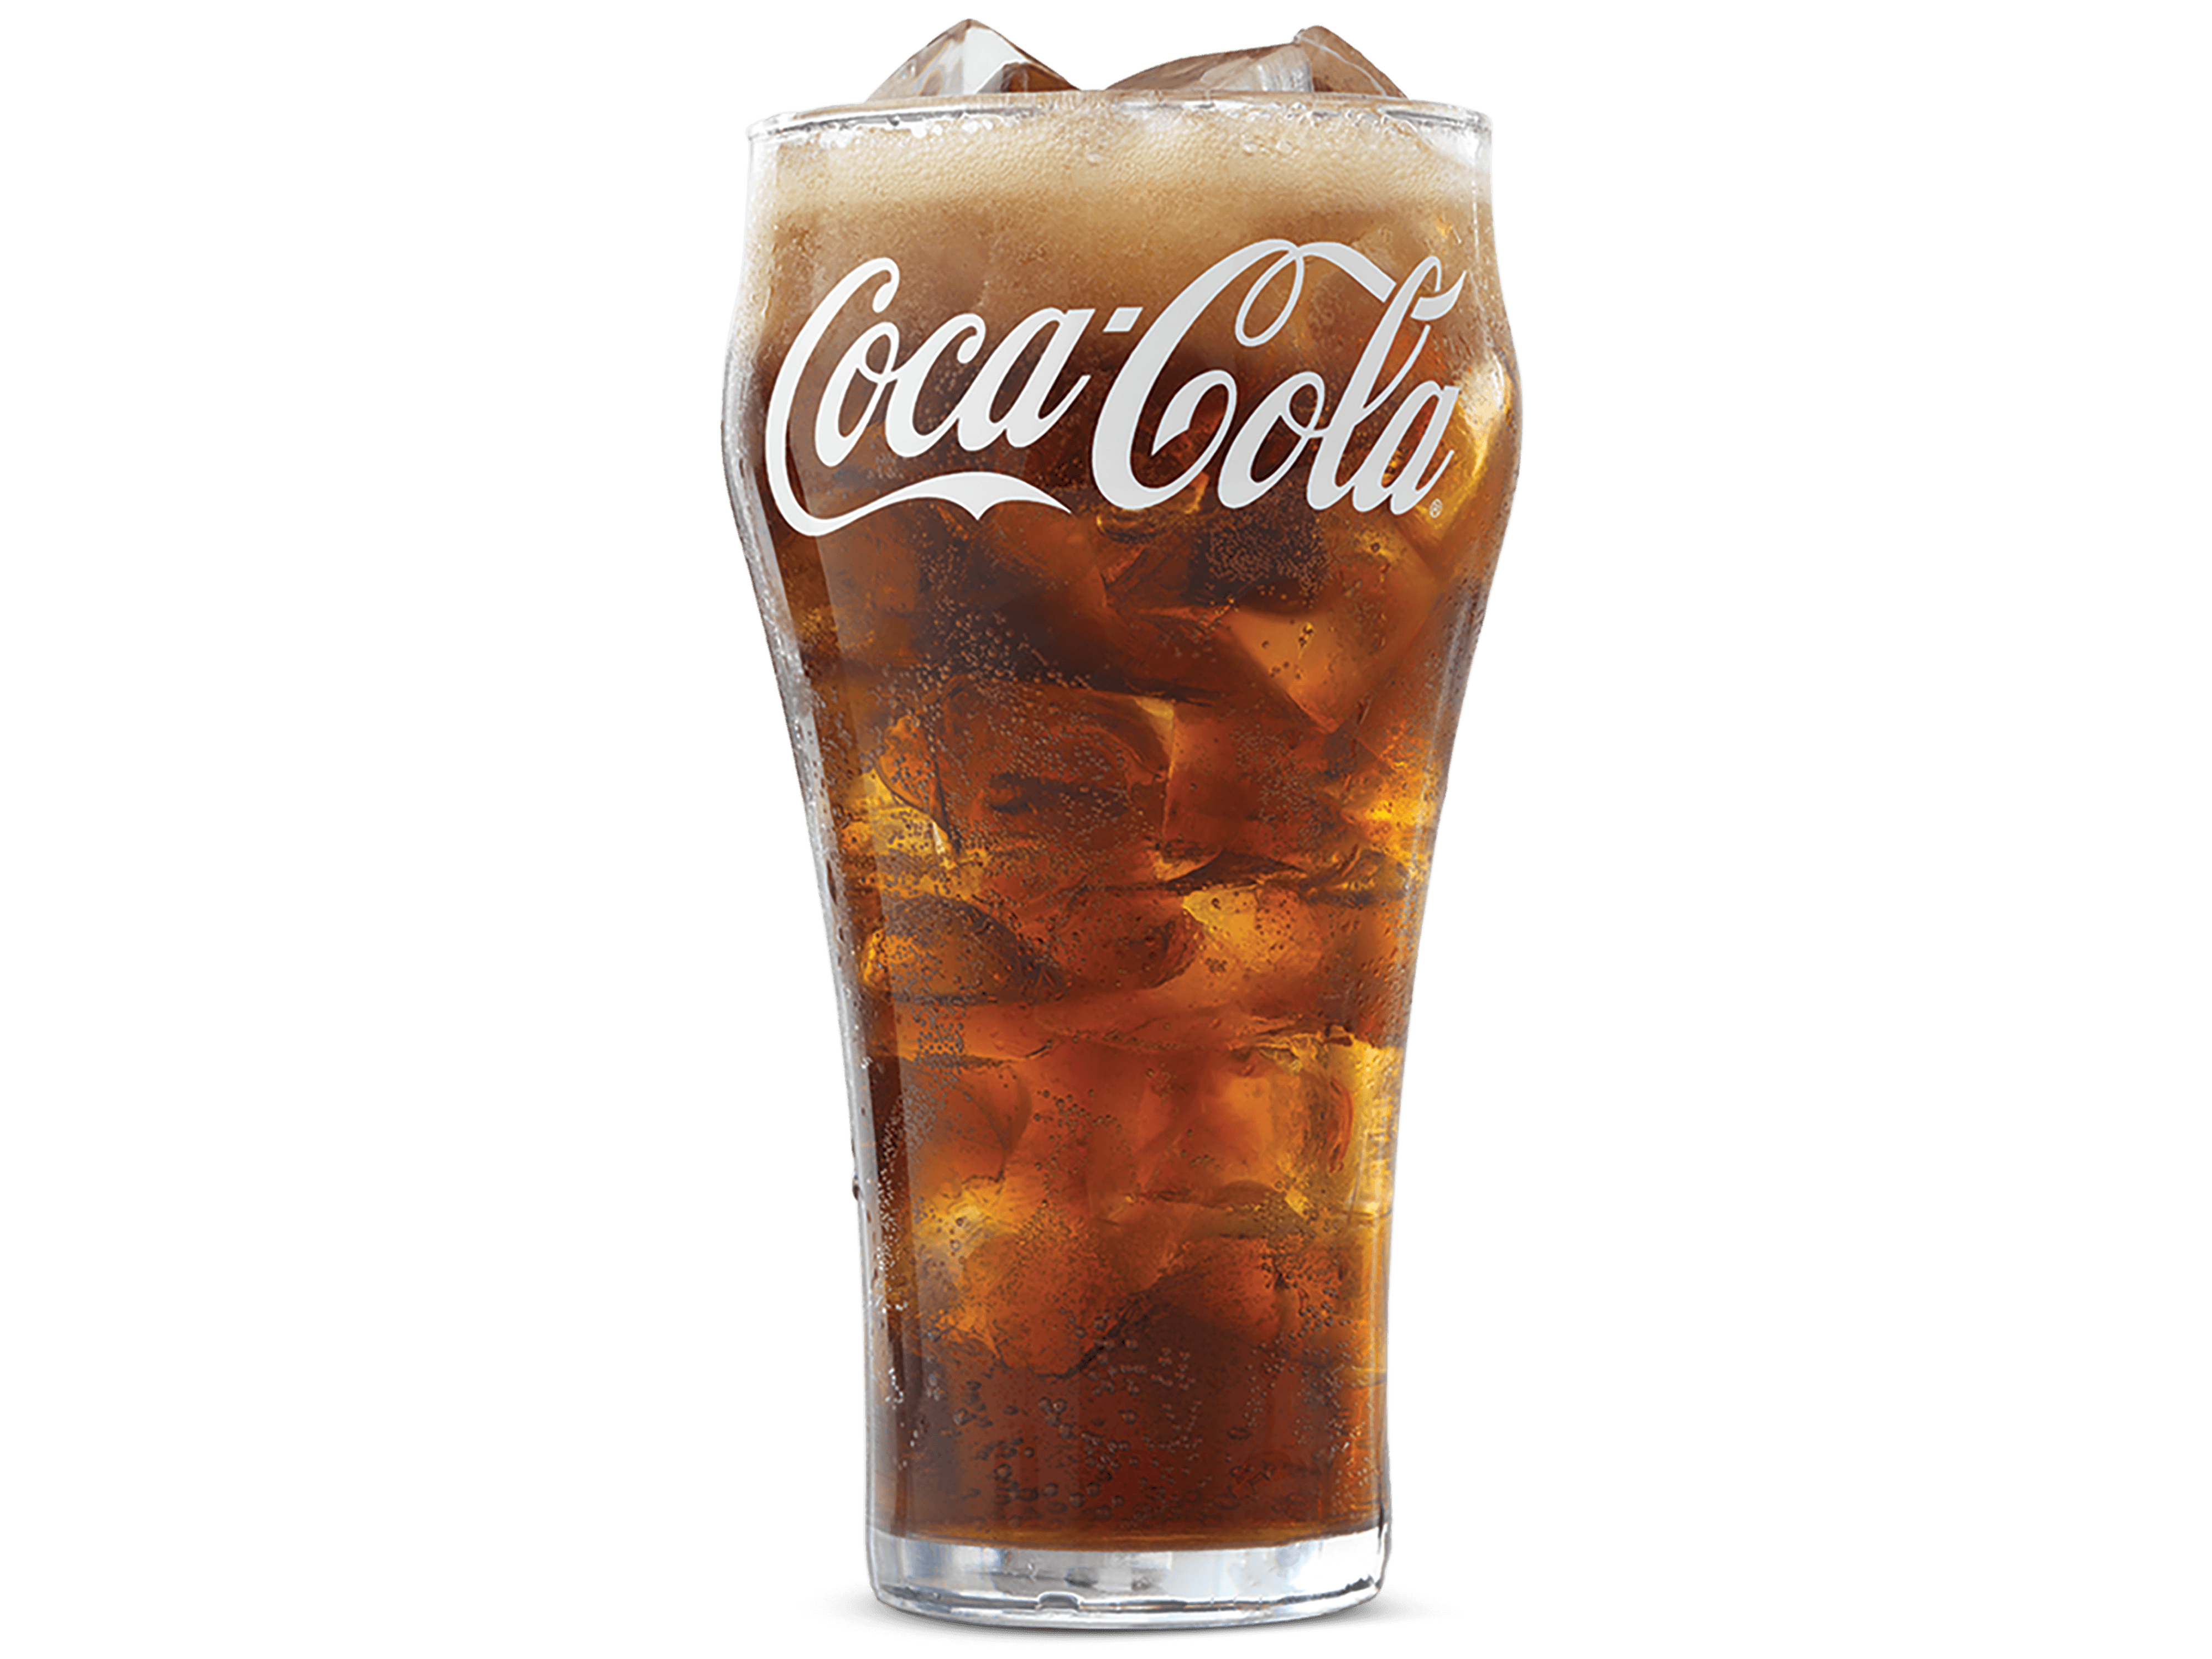 Calories in Arby's Coca-Cola